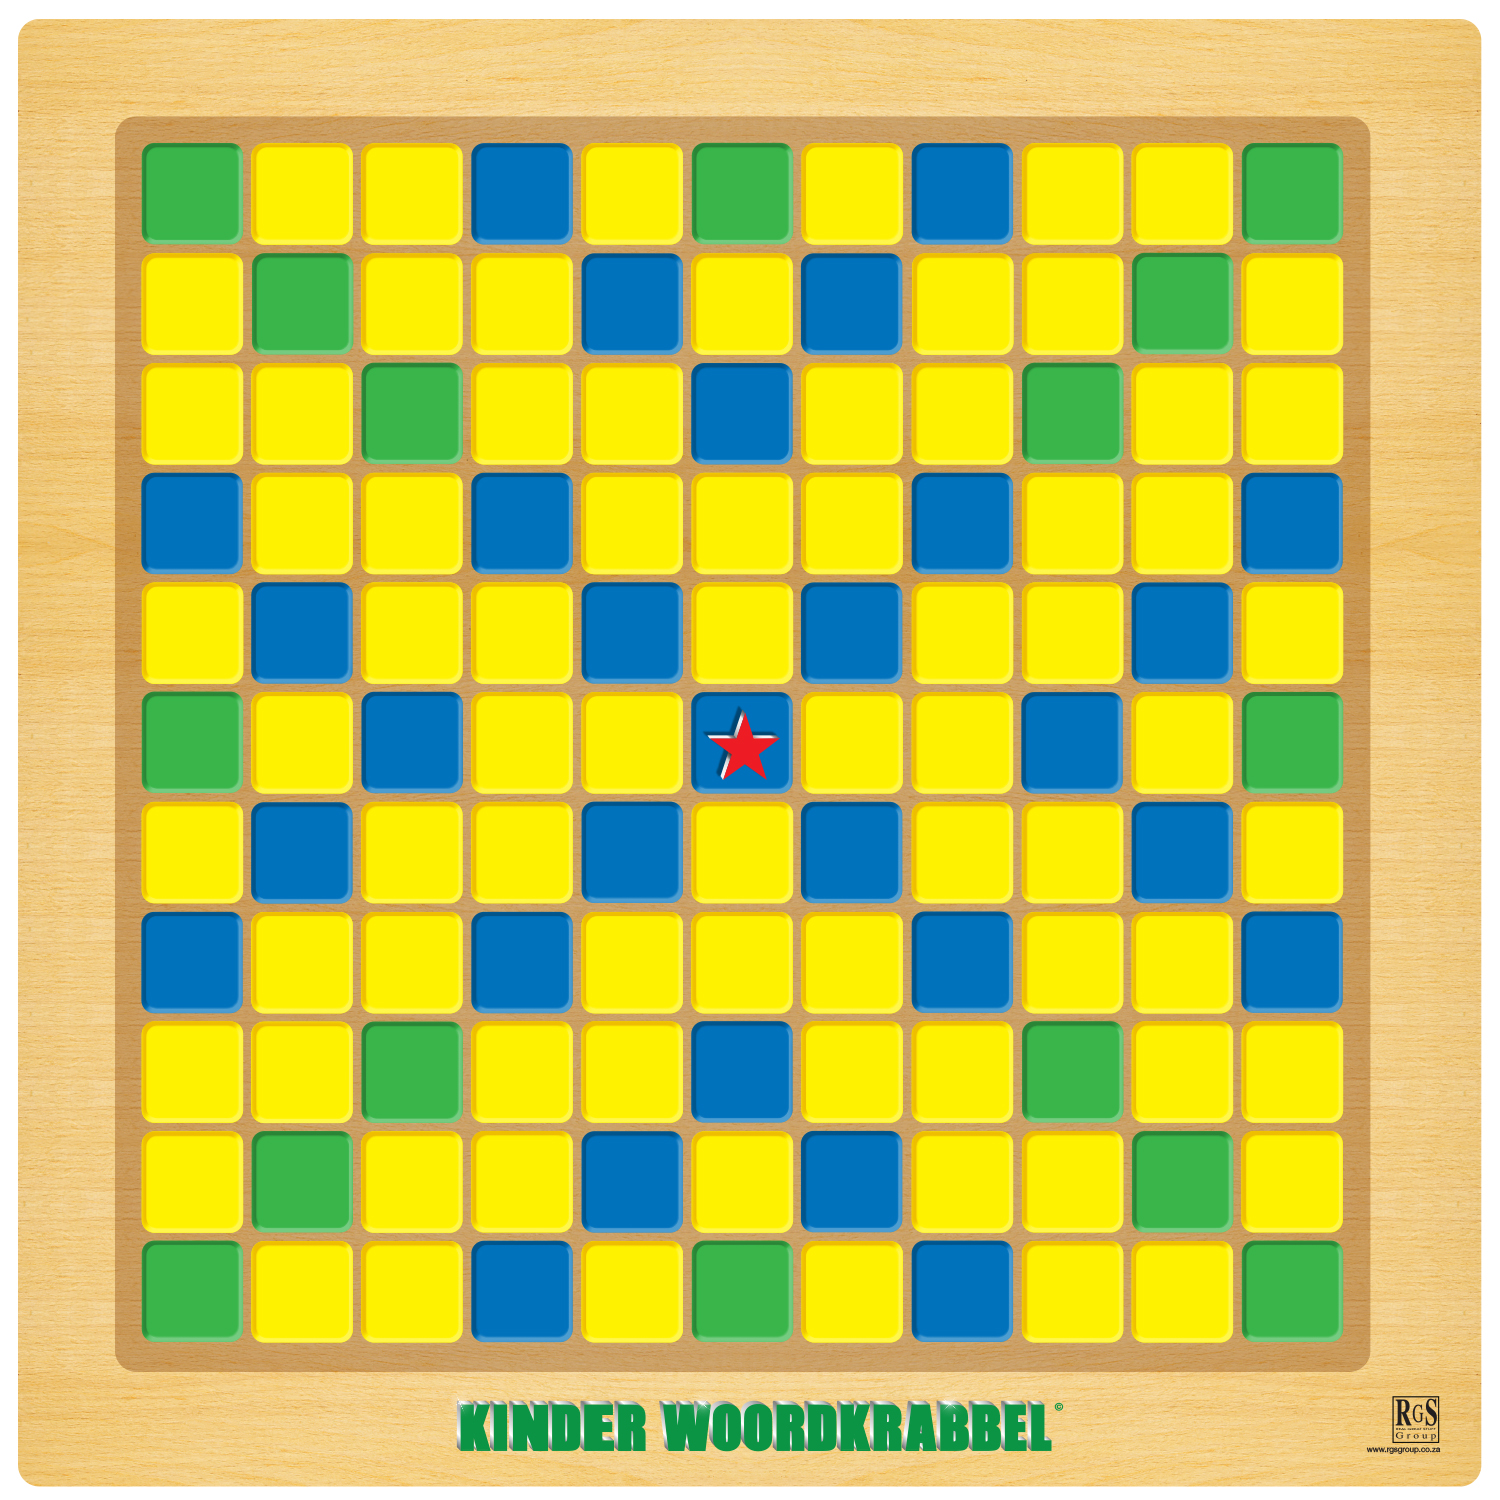 colourful scrabble type board game called Kinder Woordkrabbel